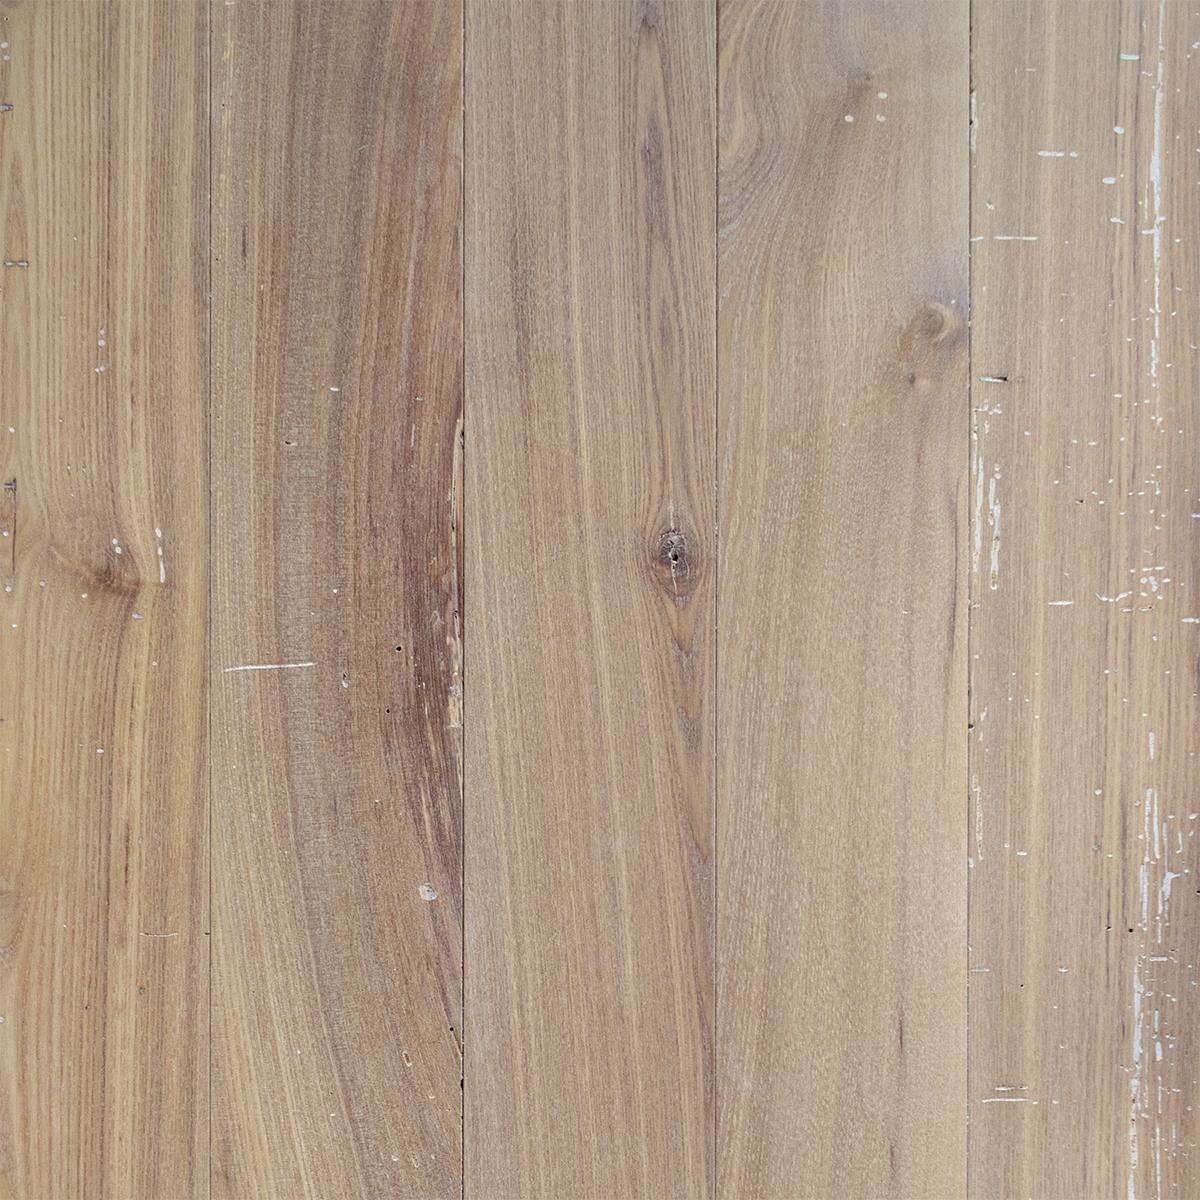 Reclaimed Wood Flooring Paneling, Reclaimed Ash Blue Laminate Flooring